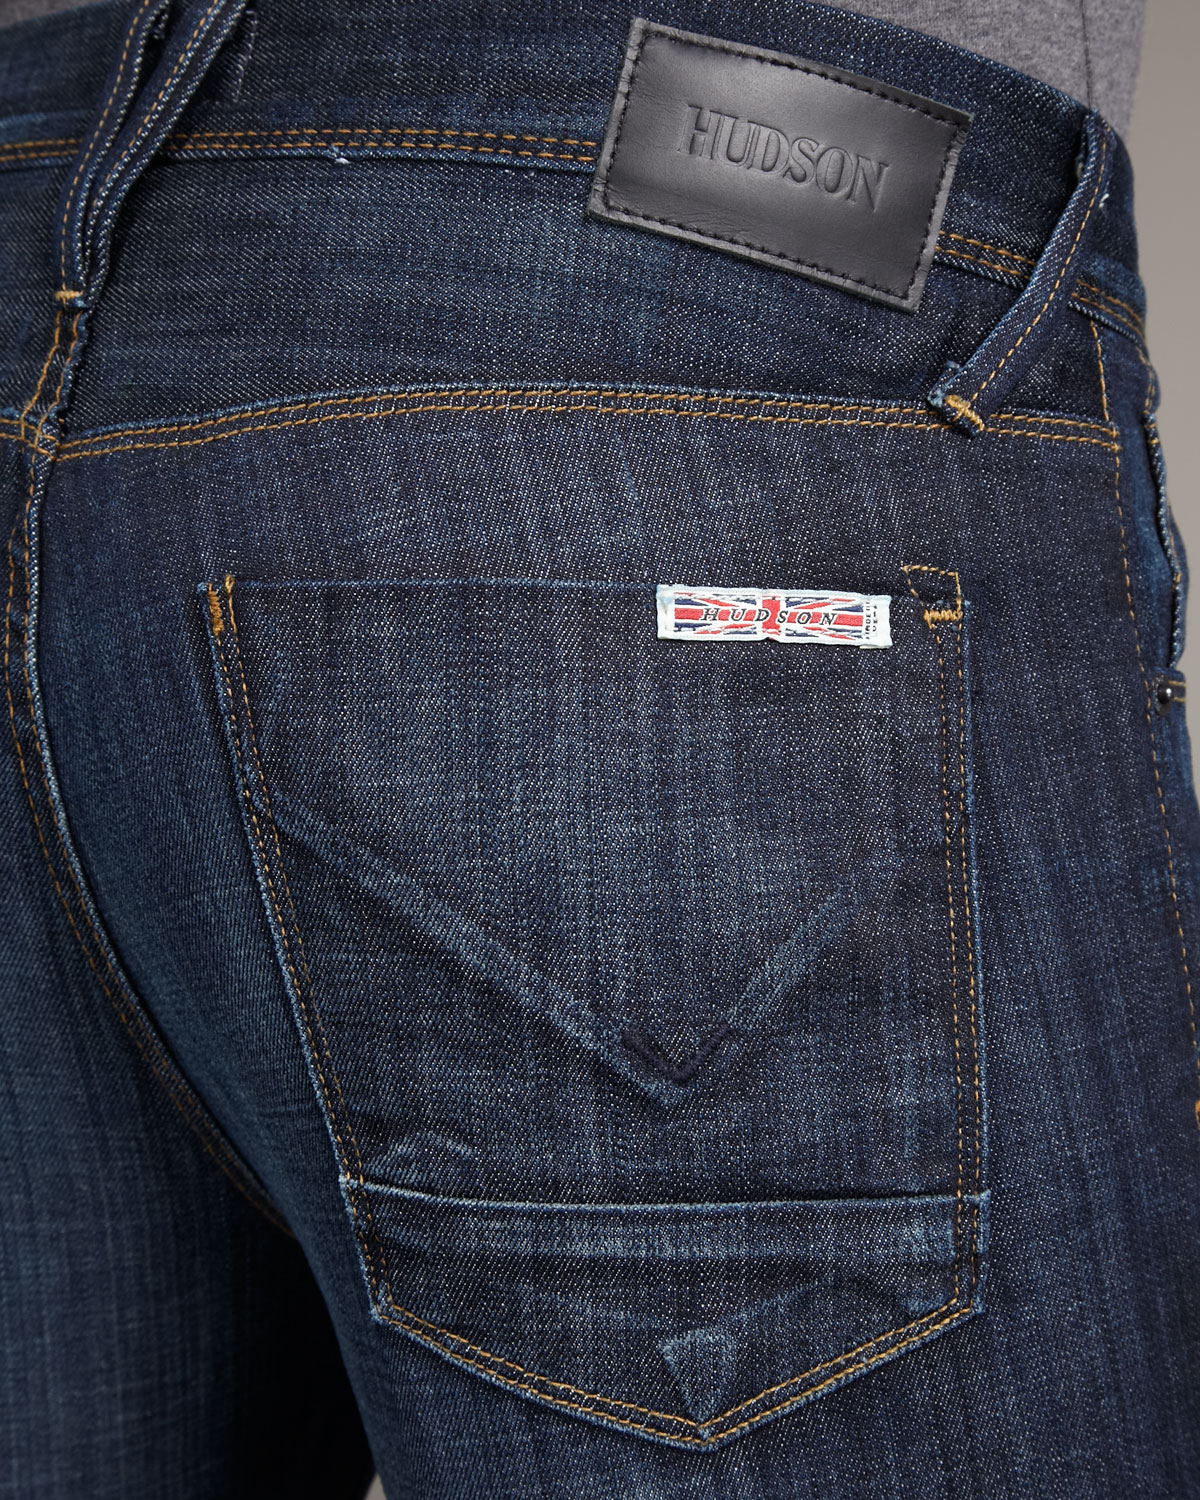 Lyst - Hudson jeans Harper Smithfield Jeans in Blue for Men